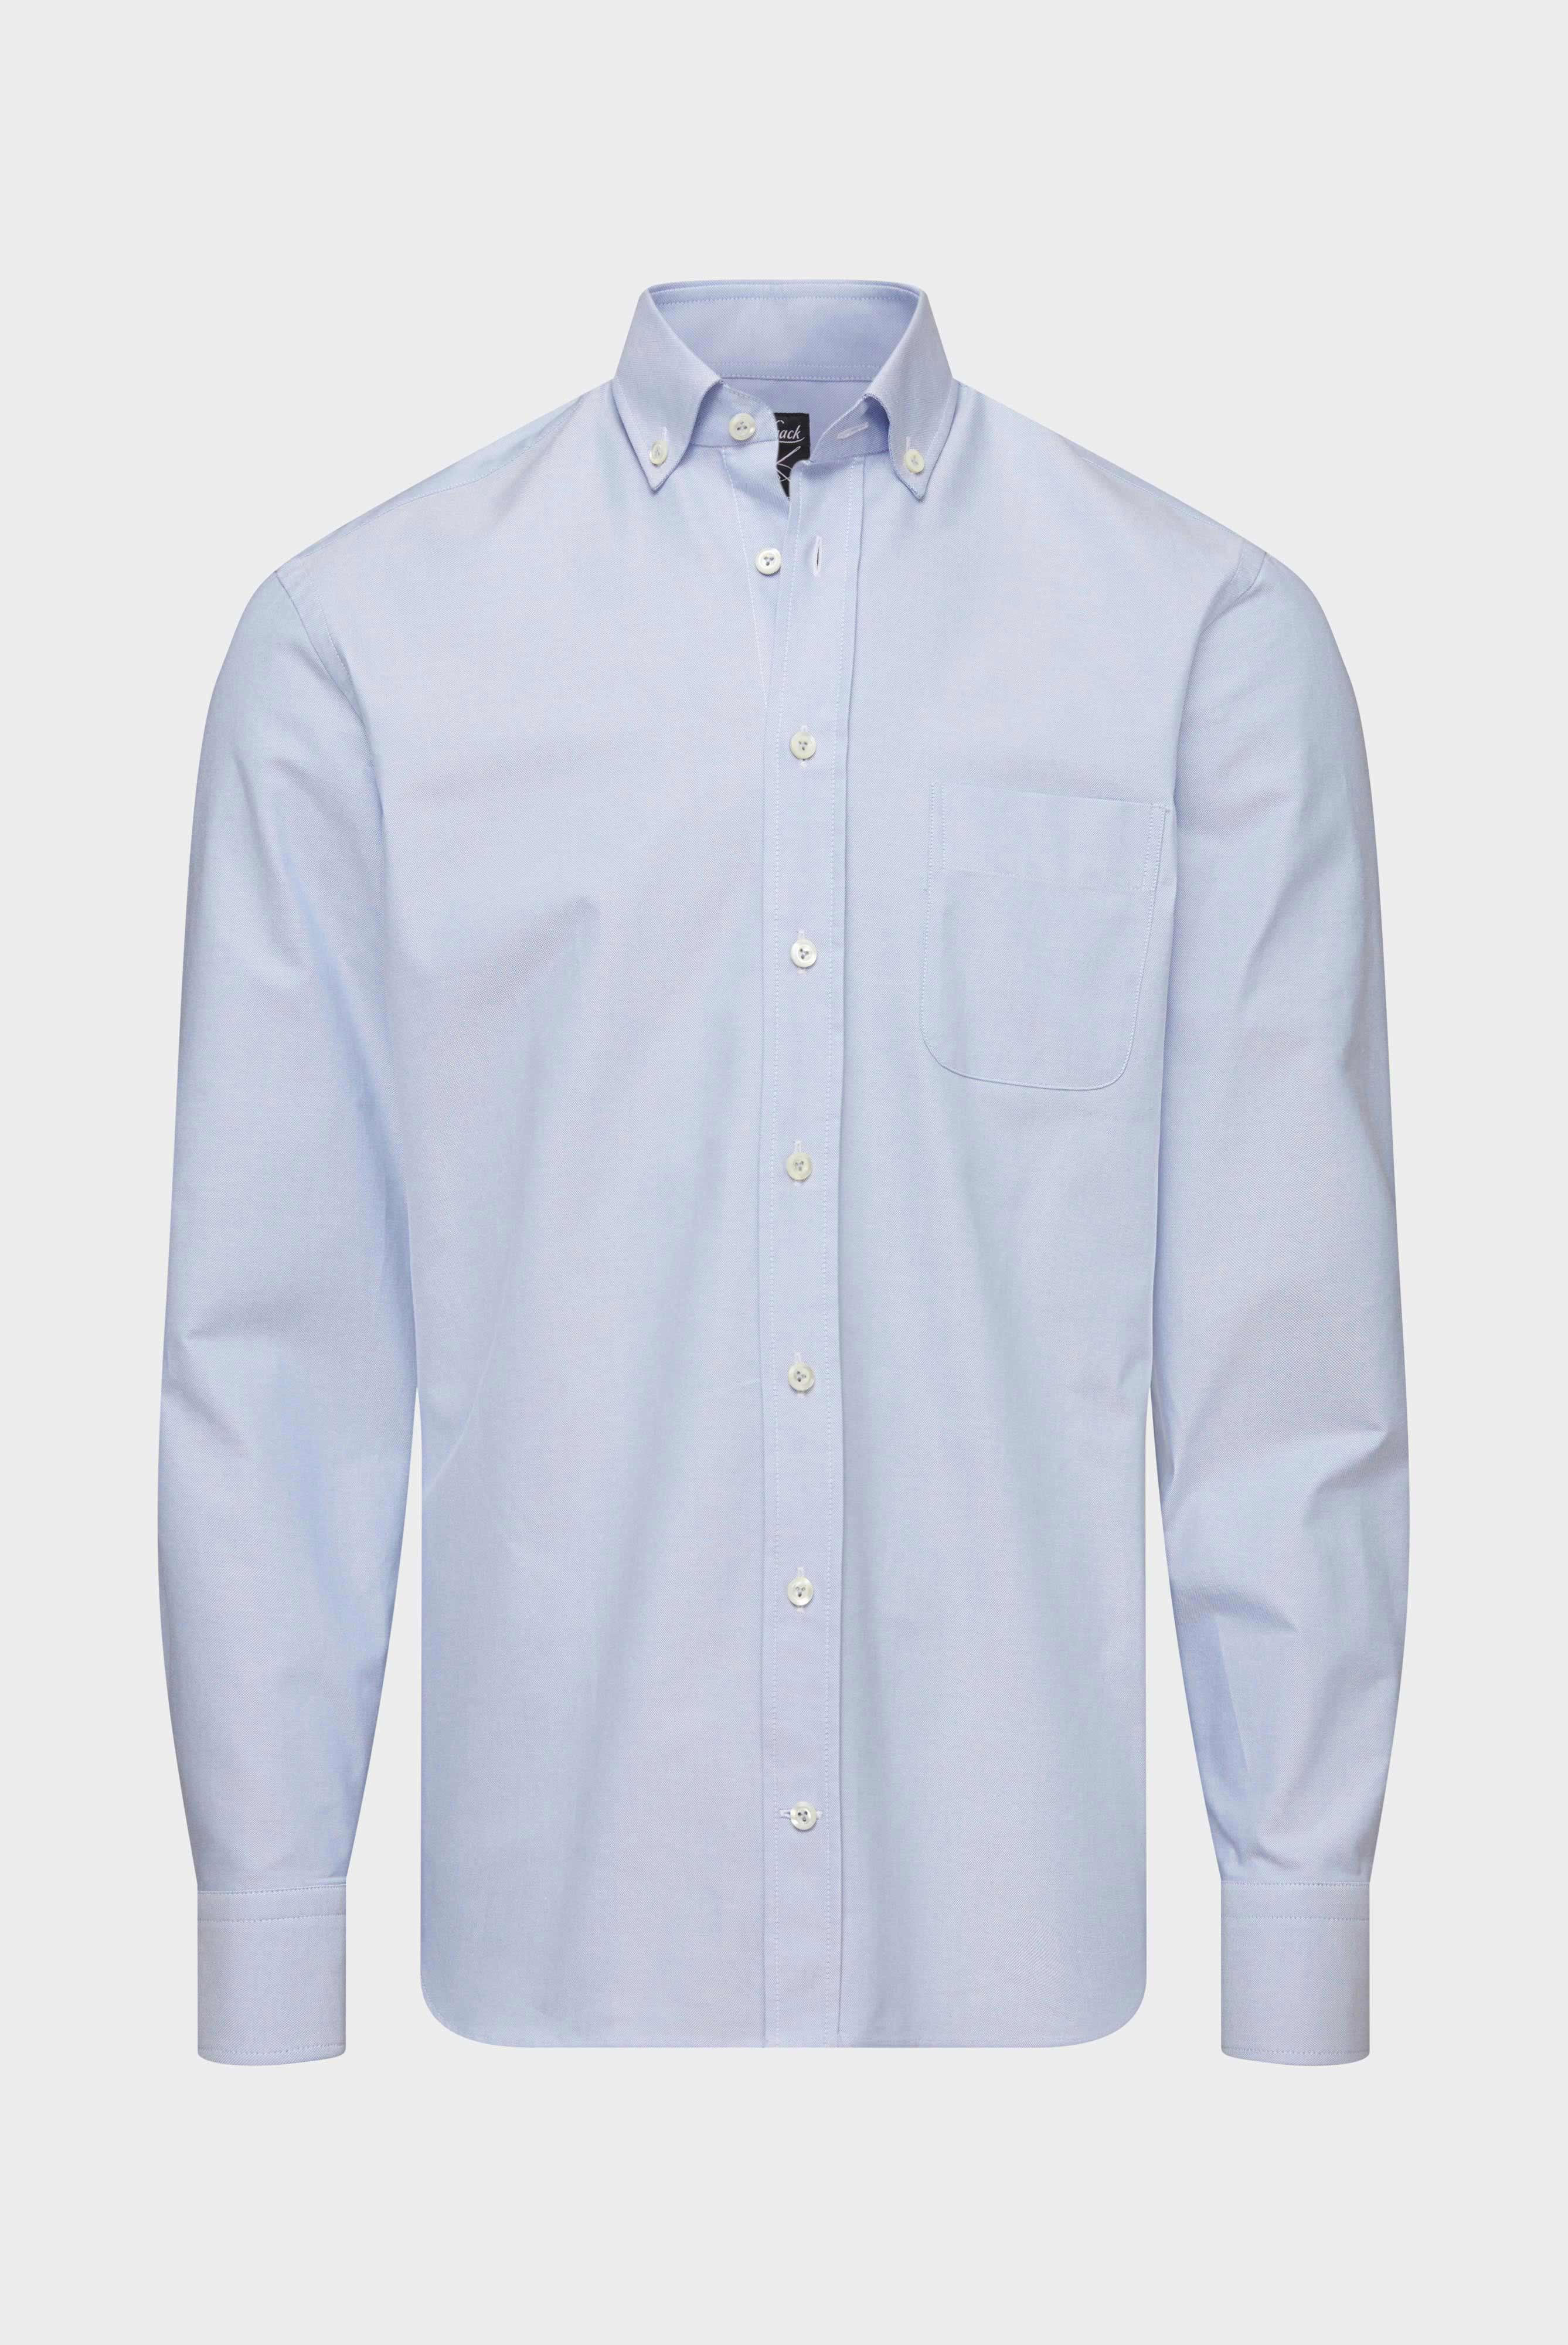 Casual Shirts+Oxford Shirt Tailor Fit+20.2013.AV.161267.730.37